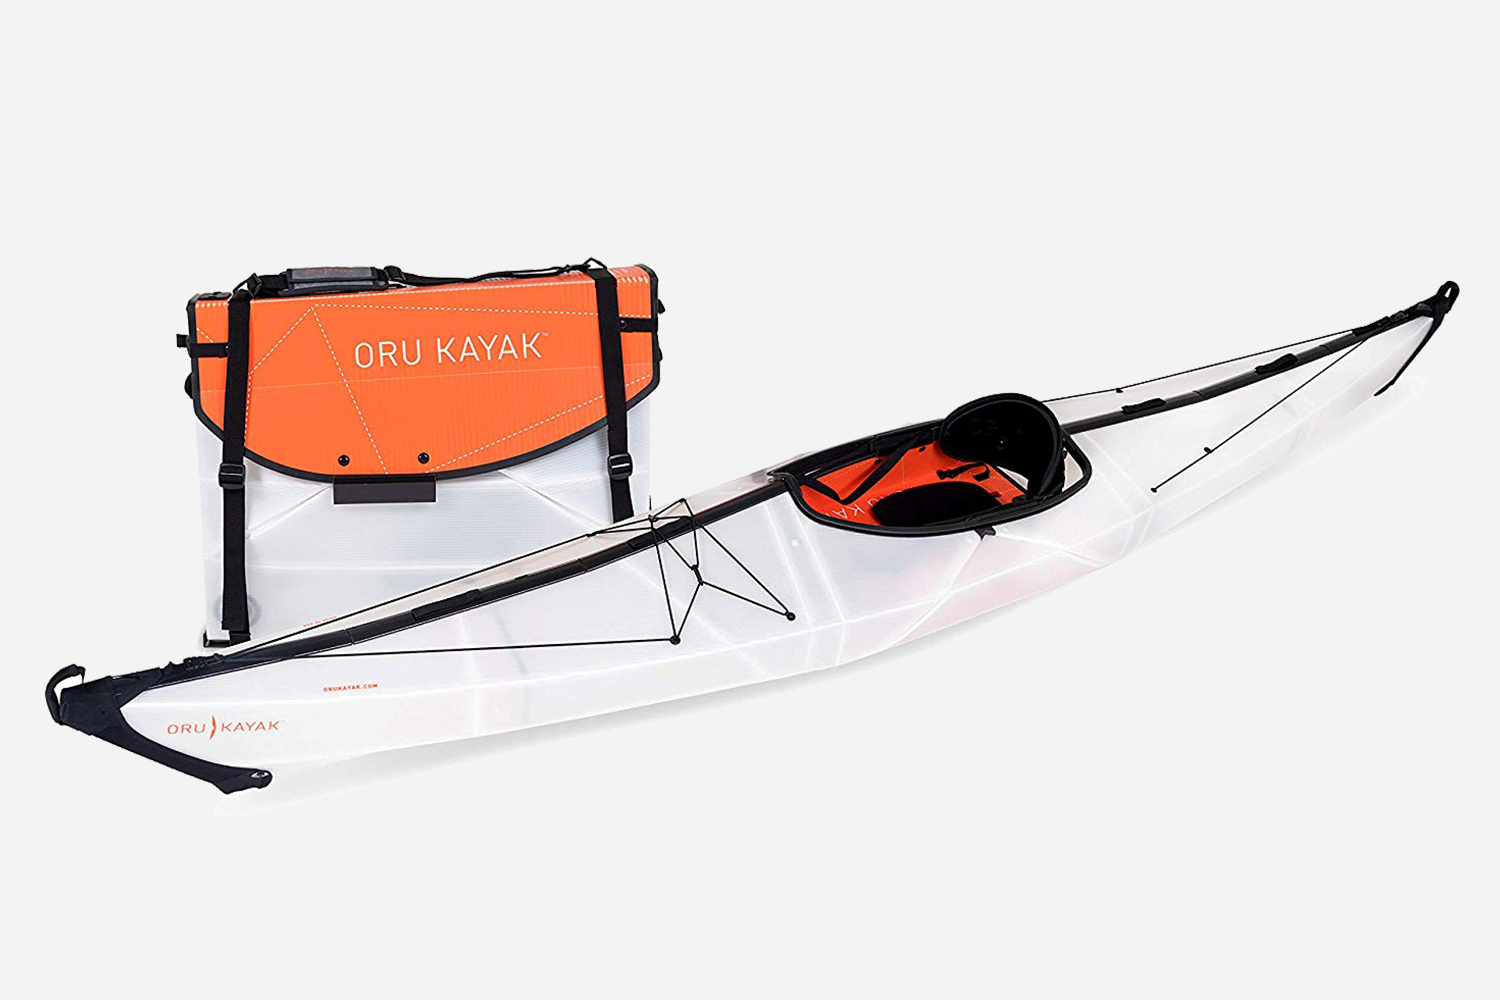 Oru Kayak on Sale at REI